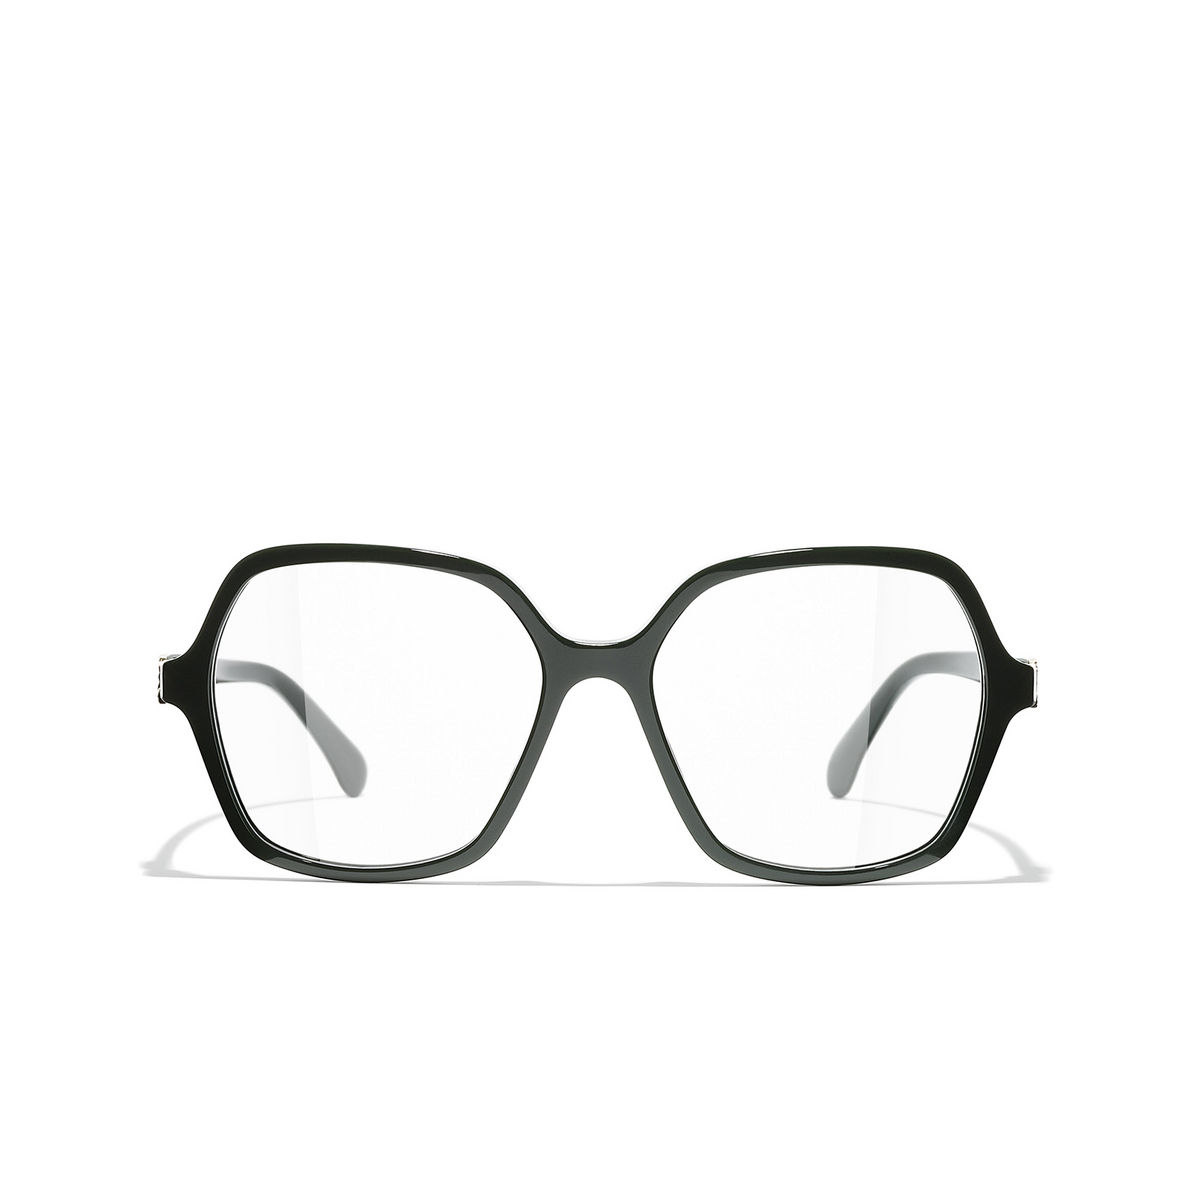 CHANEL square Eyeglasses 1702 Dark Green - front view